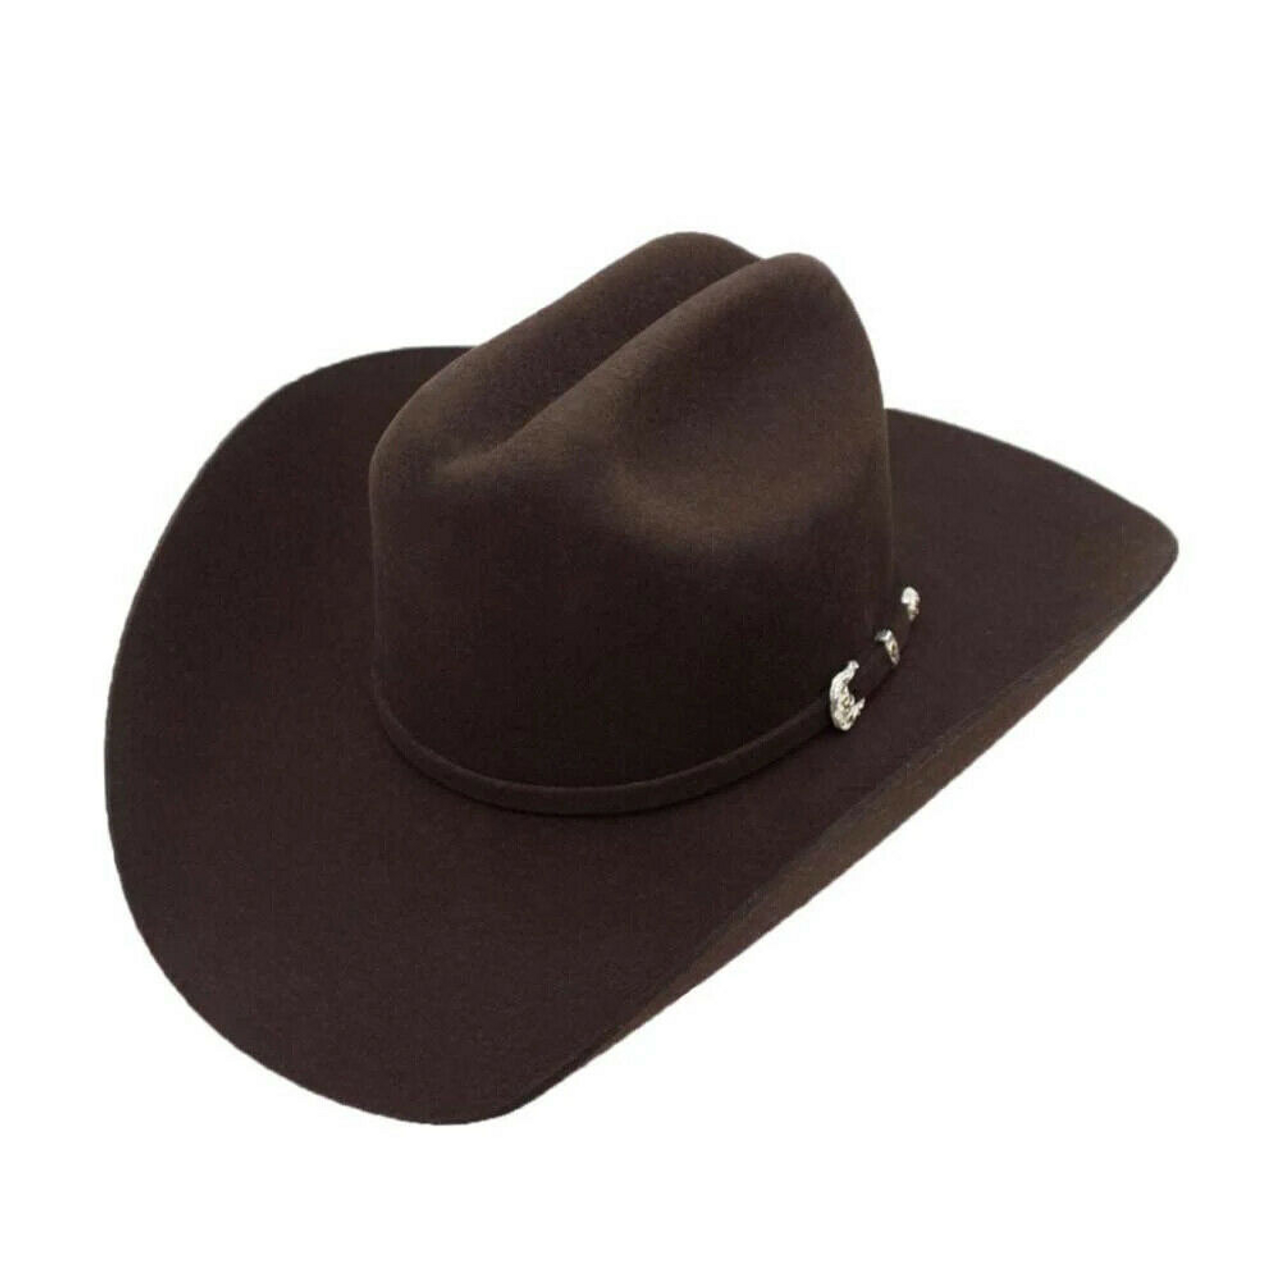 Stetson Cowboy Hats - Texanas Marca Stetson -4X Stetson Deadwood Felt Cowboy Hat Black